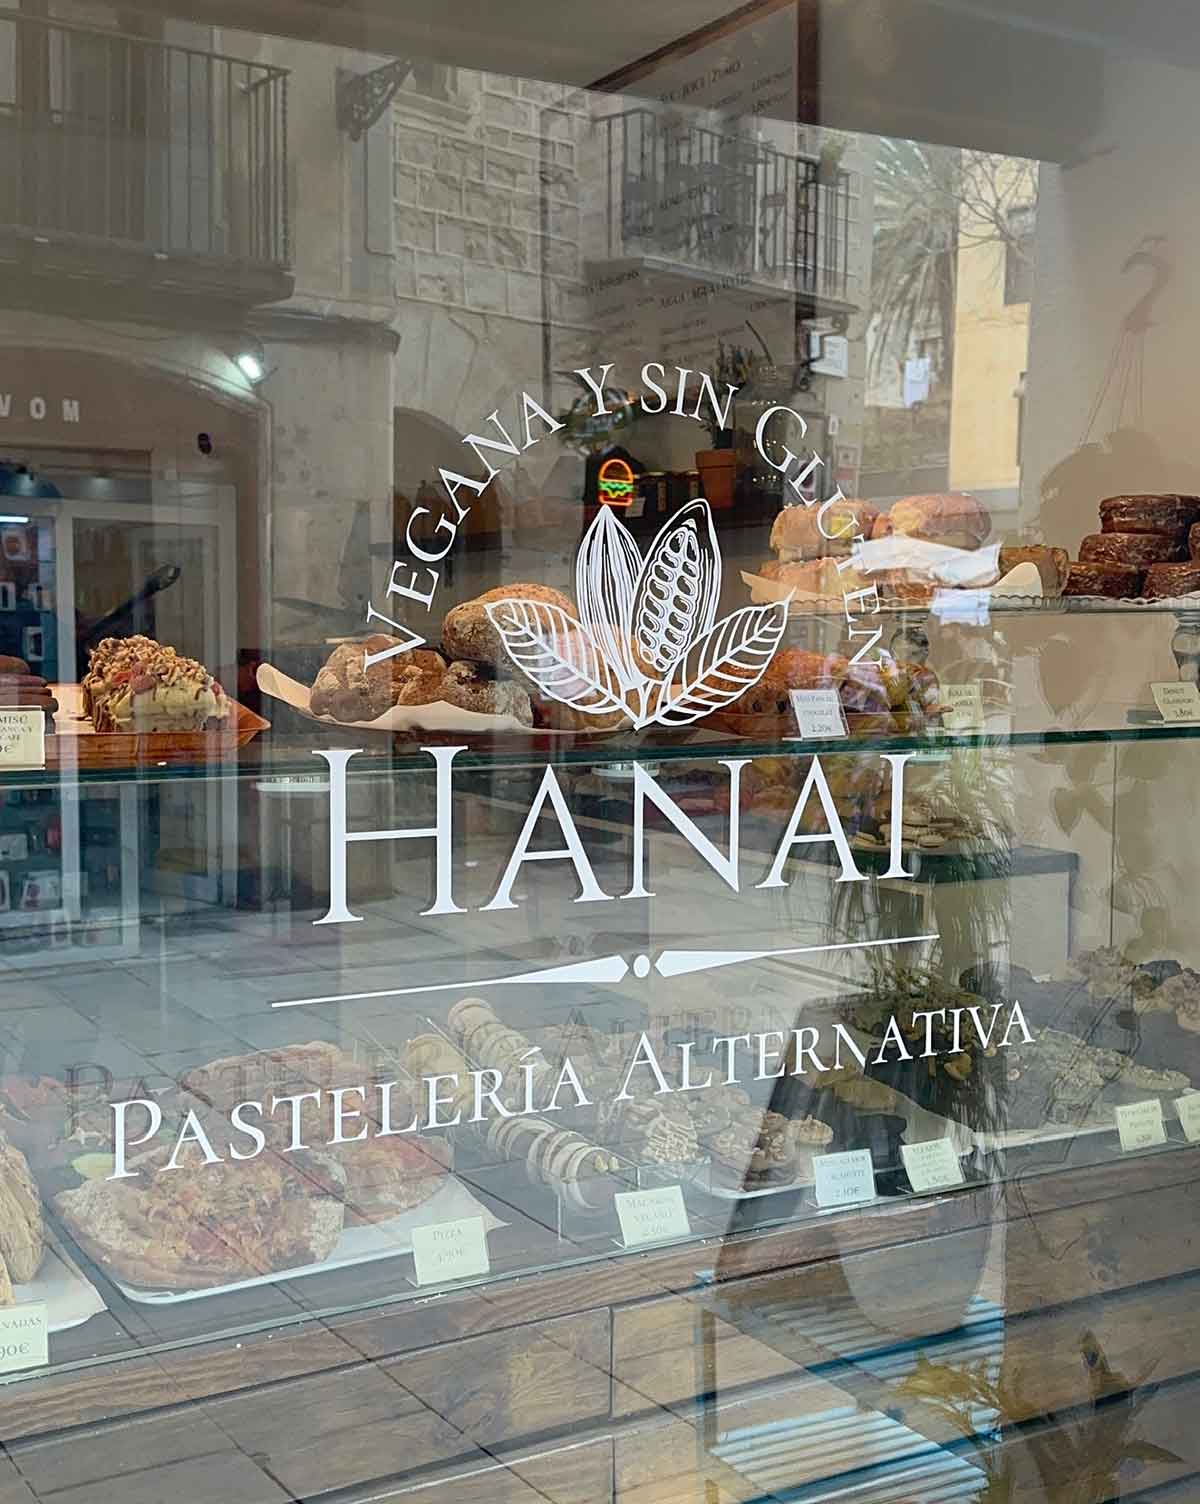 The World's best Gluten Free and Vegan Bakery is Hanai in Barcelona